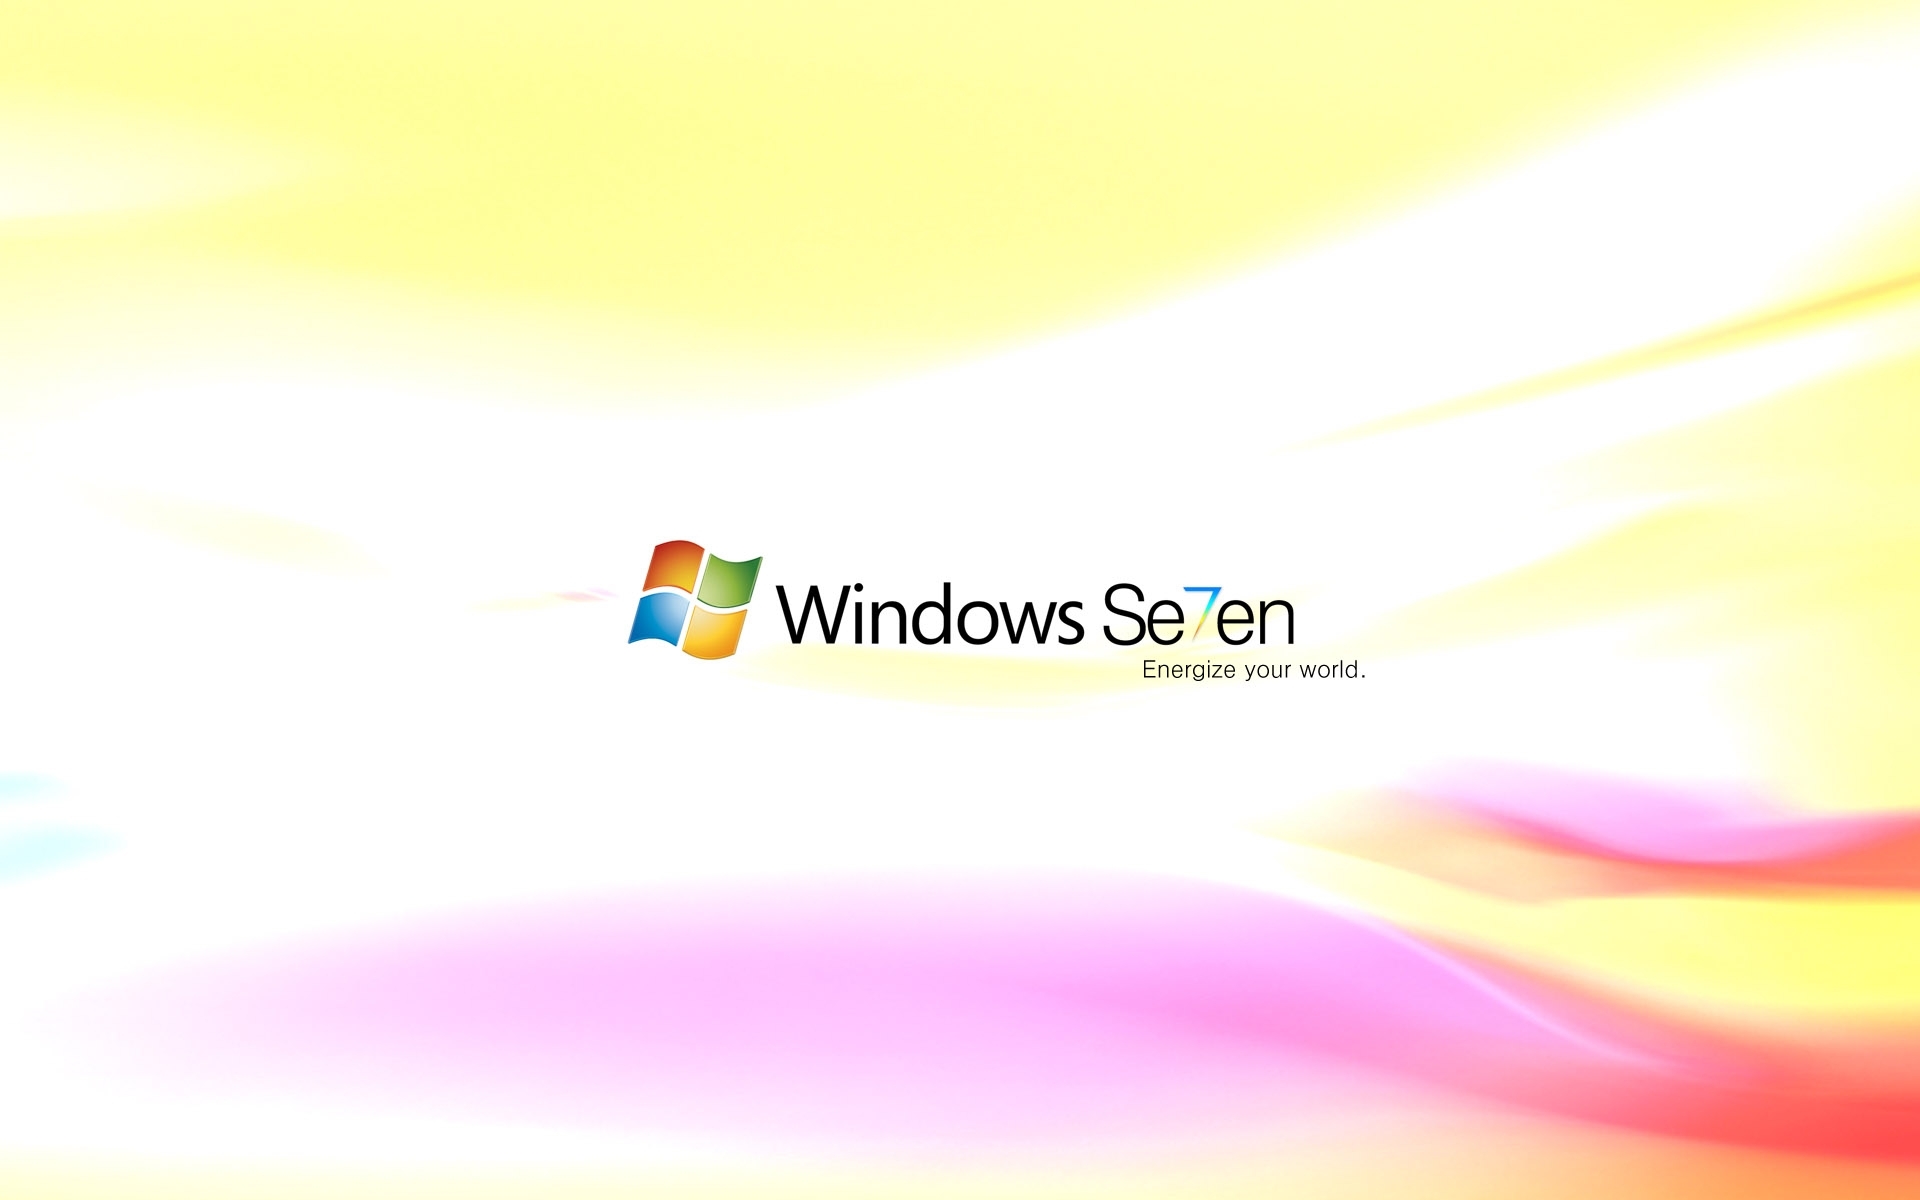 windows, logos, brands Full HD